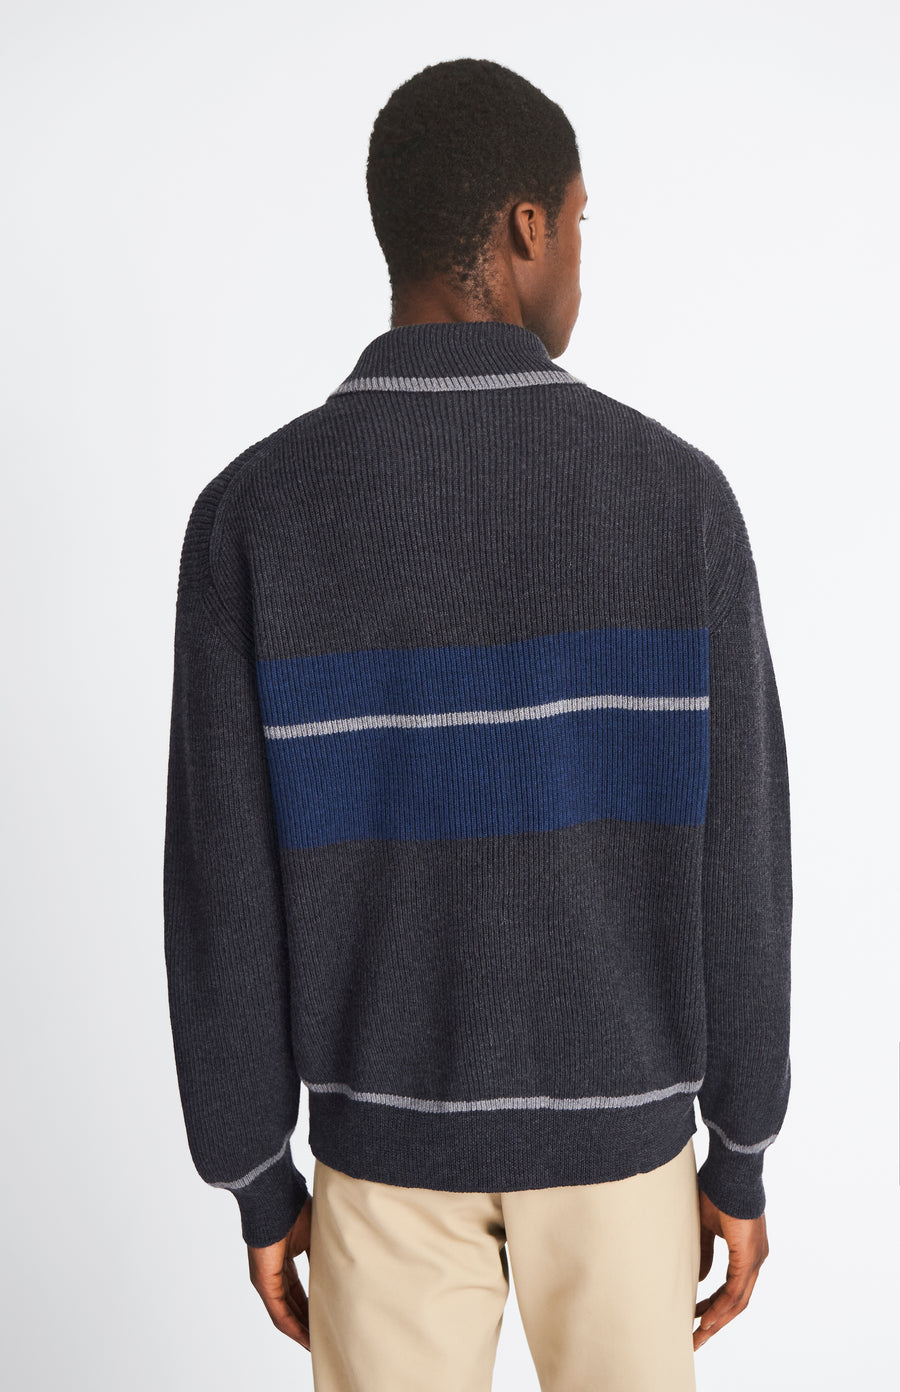 Pringle of Scotland Men's Merino Half Zip Sweater In Charcoal showing rear stripe detail